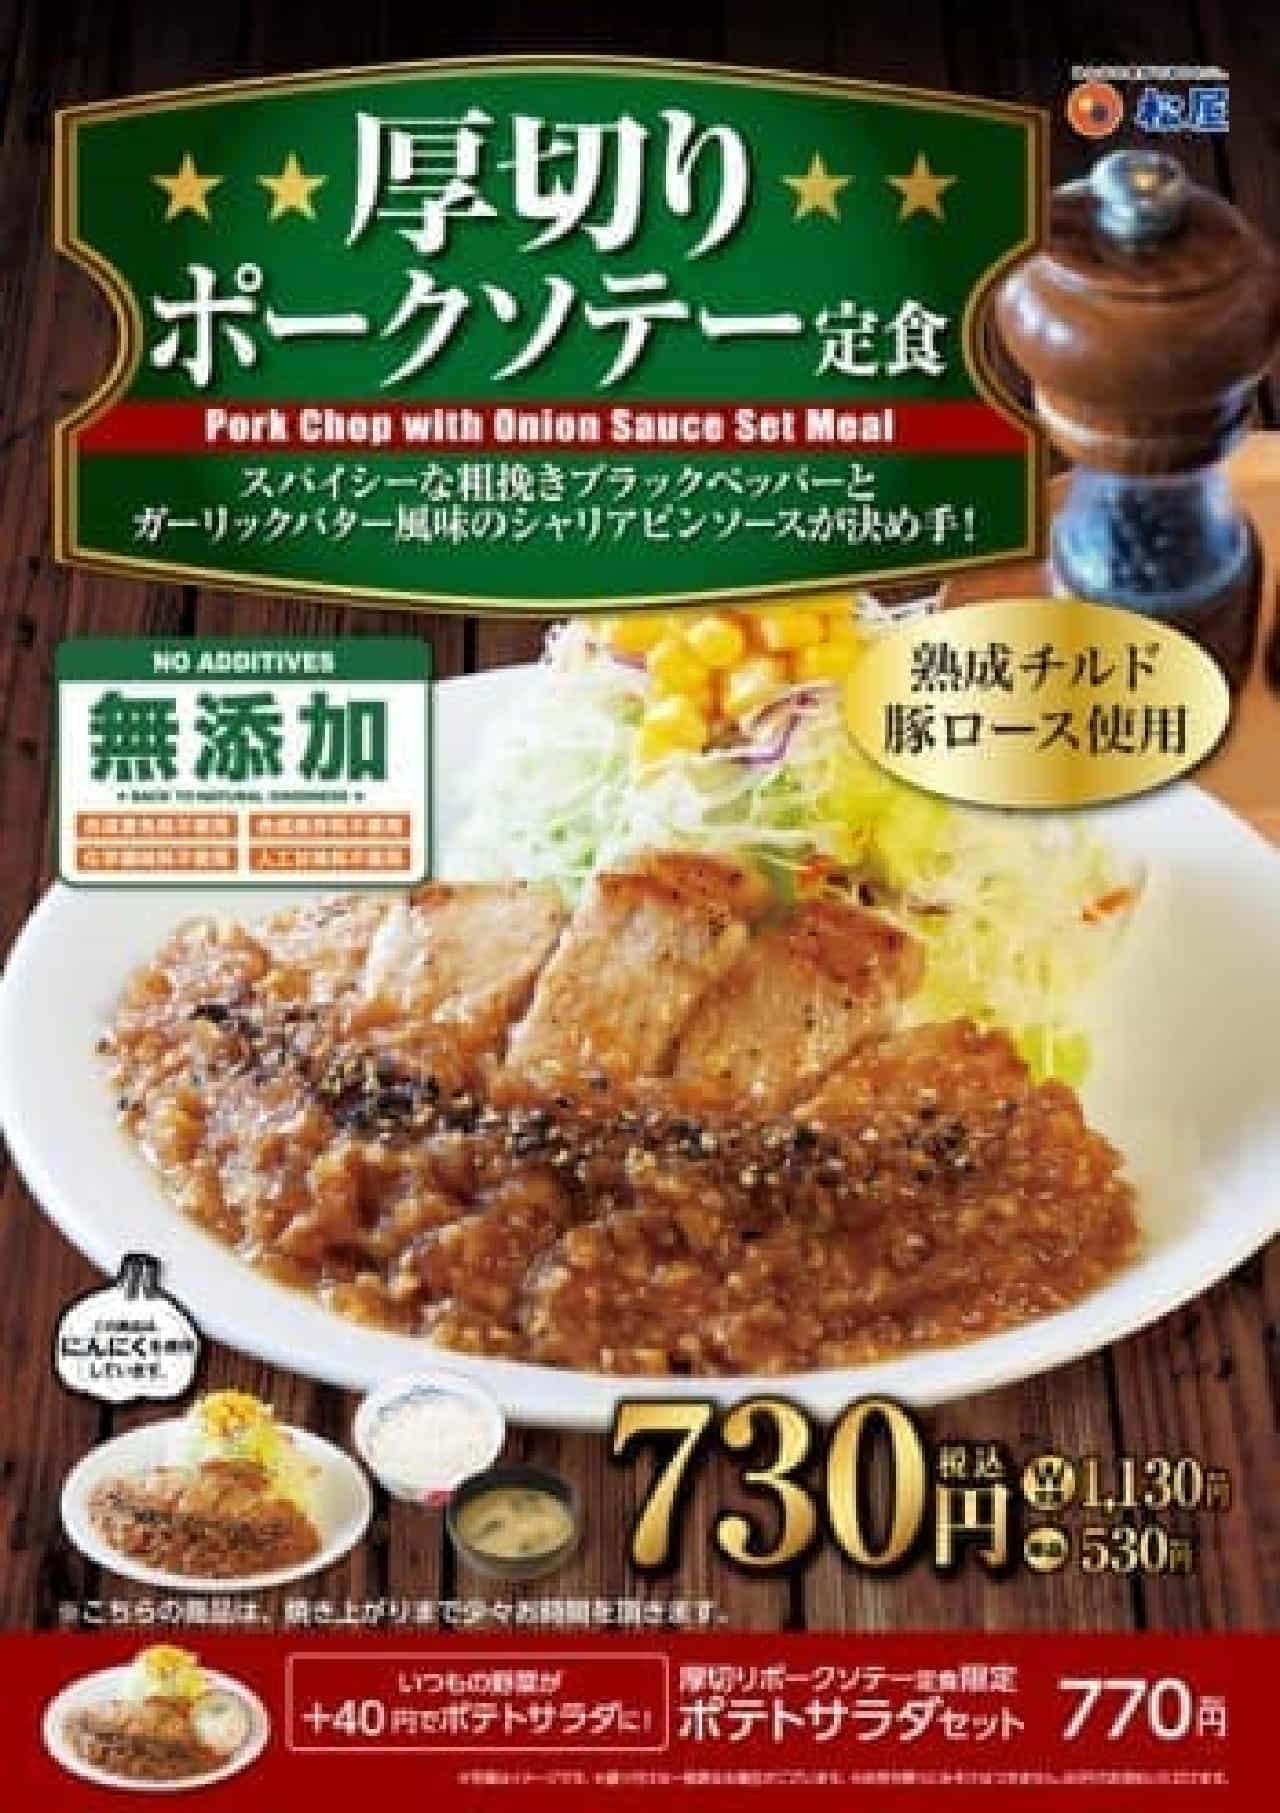 Matsuya "Thick sliced pork saute set meal"